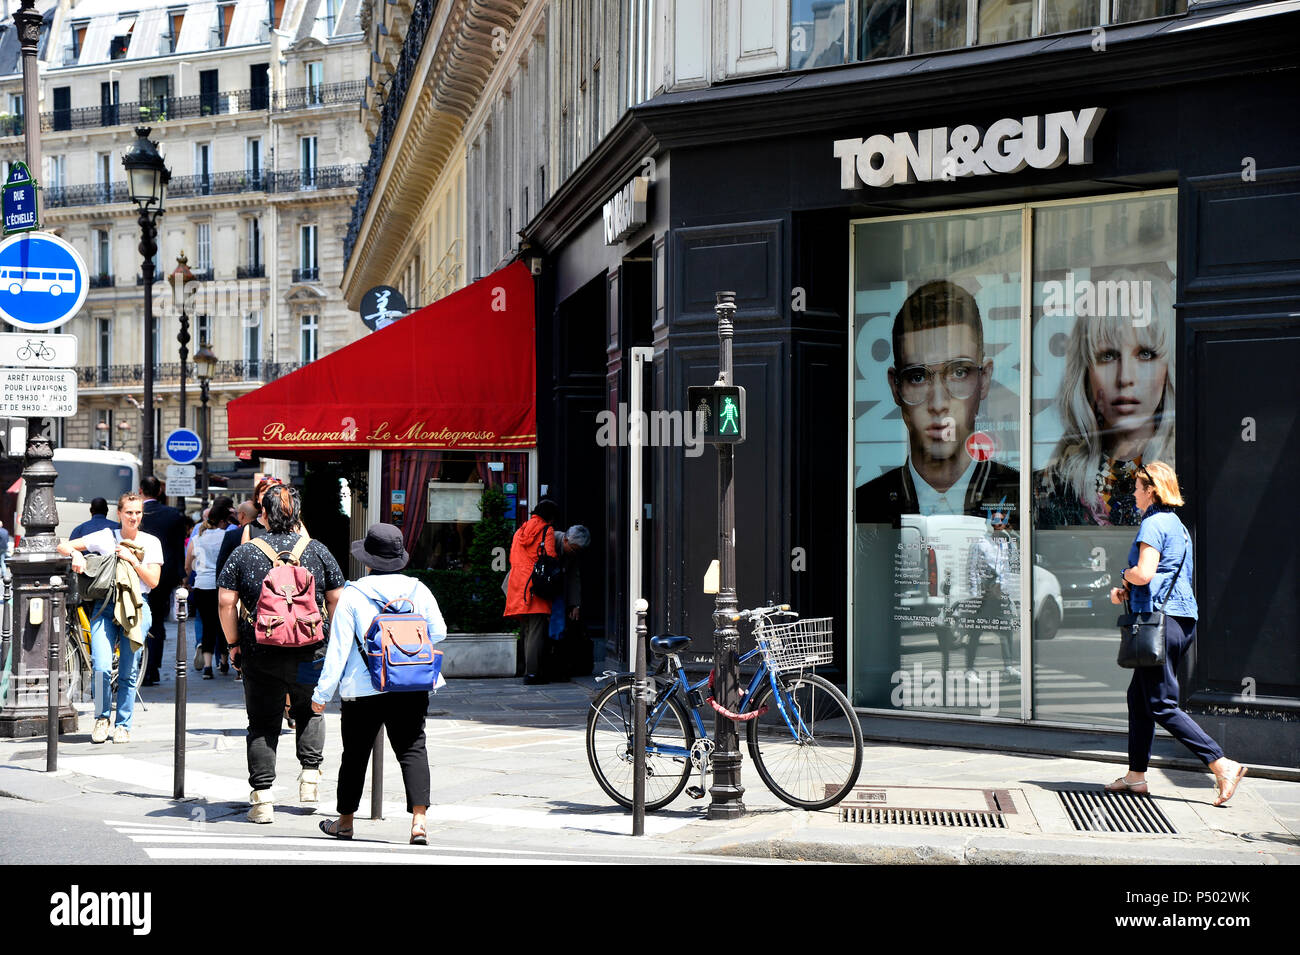 Toni & Guy hairdresser store - Paris - France Stock Photo